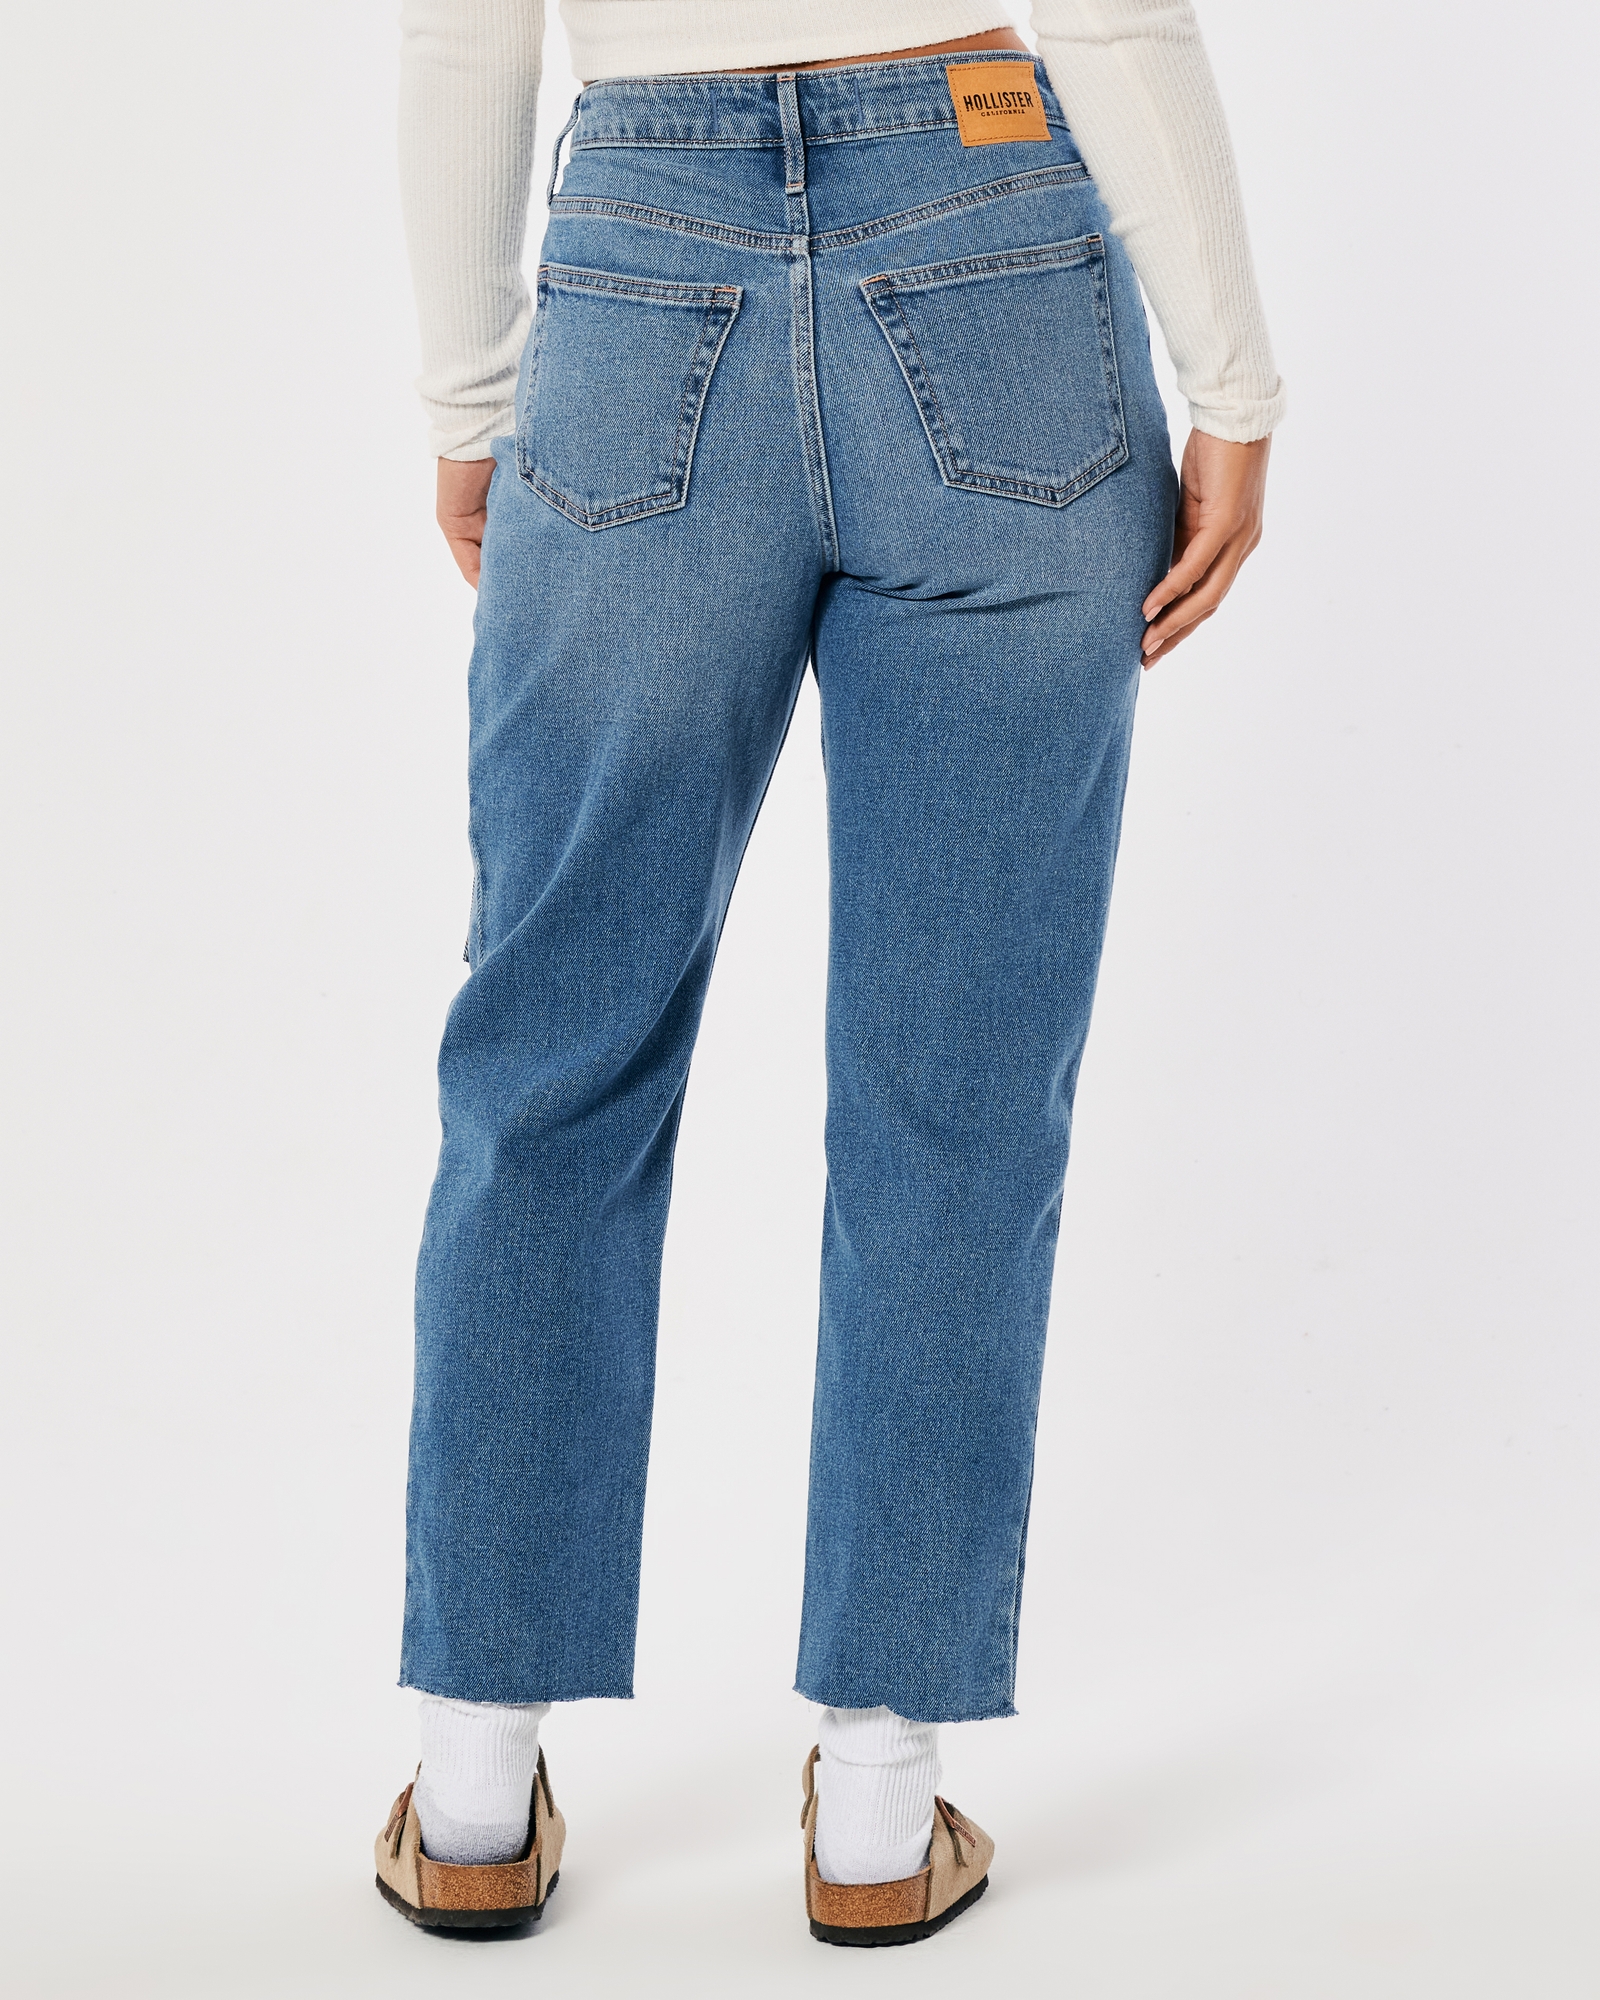 1826 / Diamante/NINA Rossi Womens Super Plus Size Stretchy Blue/Black Denim  Jeans Skinny Leg Pants Size 14 to 32 at  Women's Jeans store